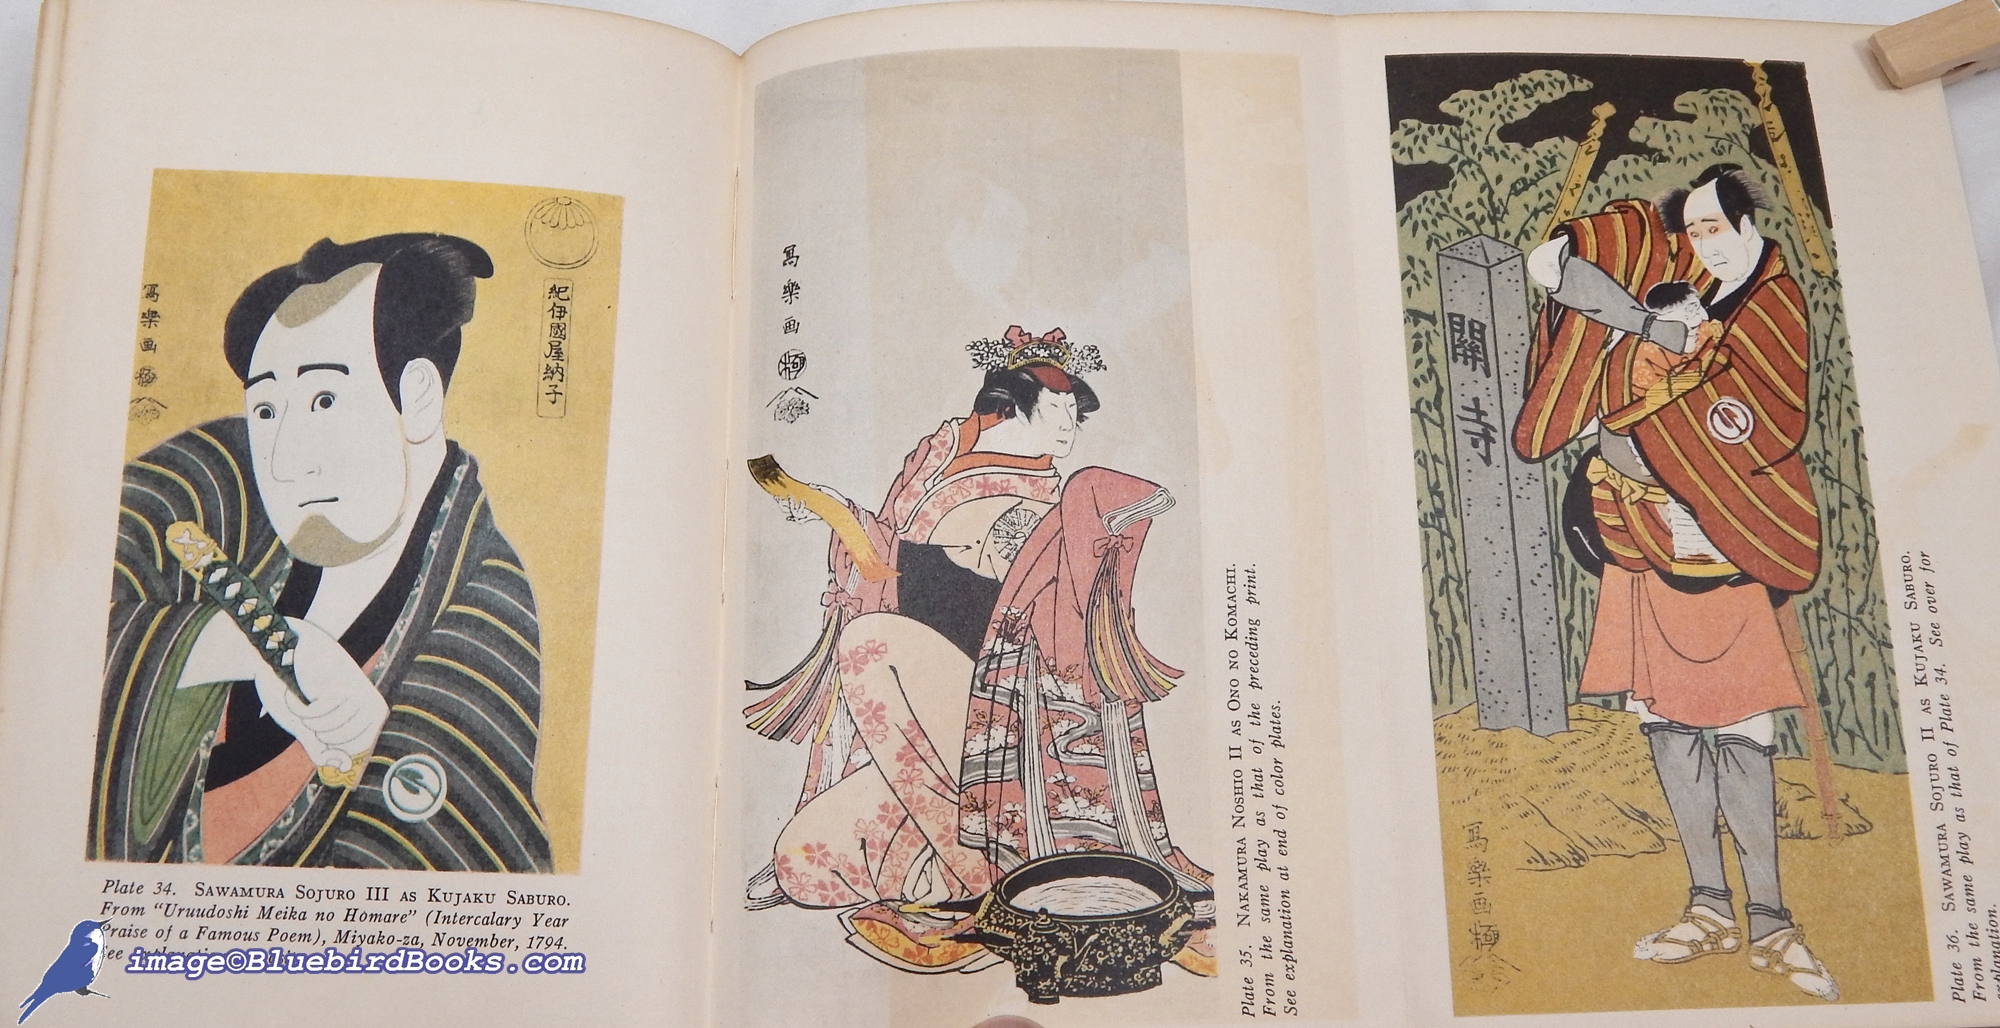 KONDO, ICHITARO (ORIGINAL JAPANESE TEXT); BLUM, PAUL C. (ENGLISH TRANSLATION) - Toshusai Sharaku (Worked 1794-1795) (Kodansha Library of Japanese Art, Vol. 2)